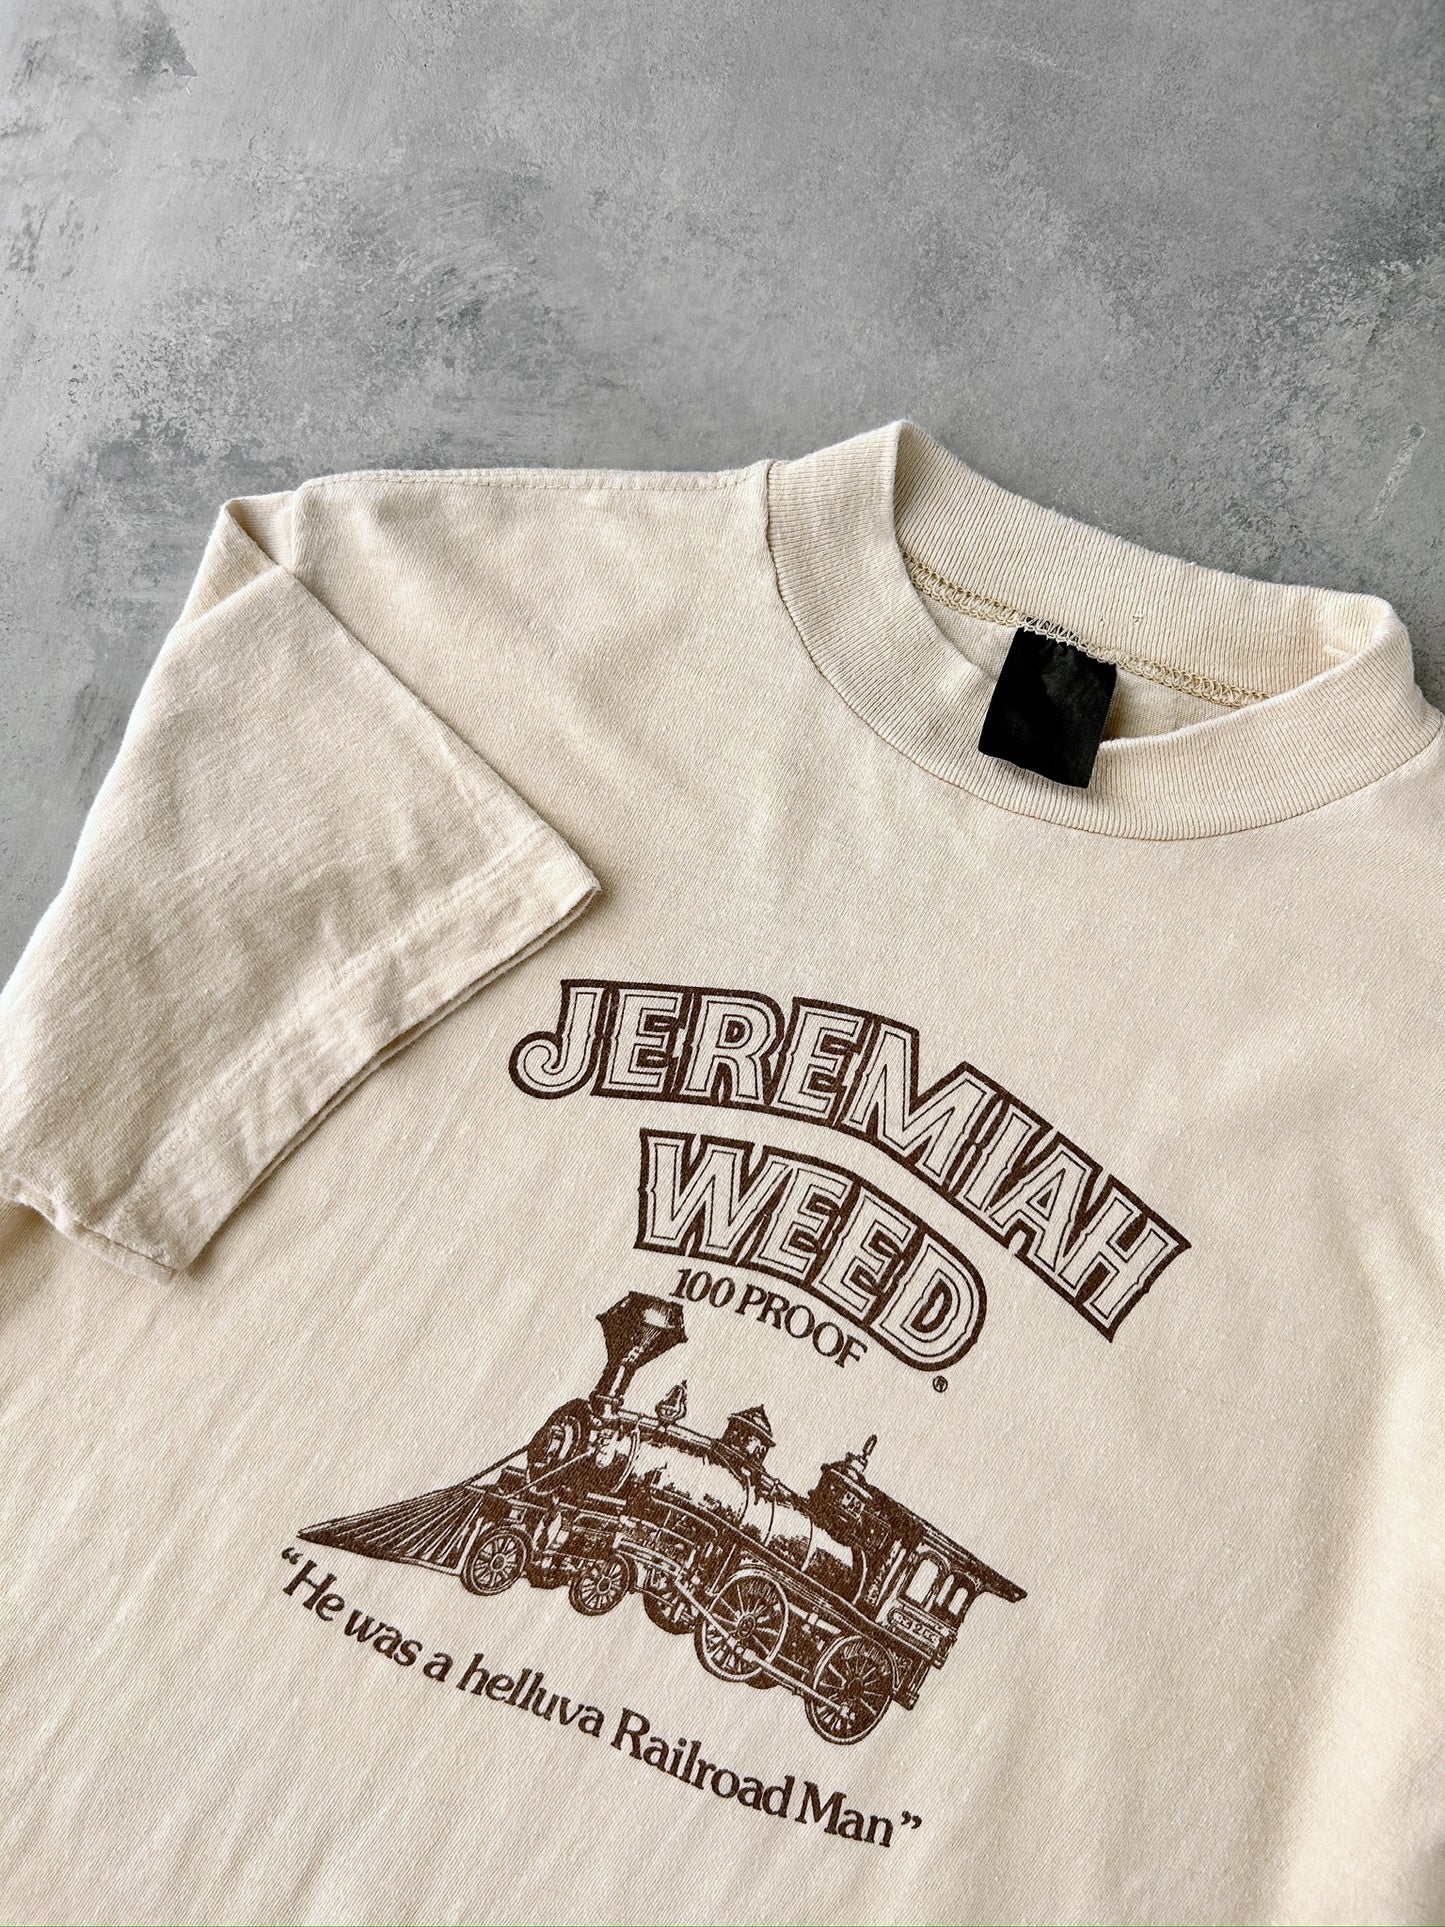 Jeremiah Weed Bourbon T-Shirt '80 - Small